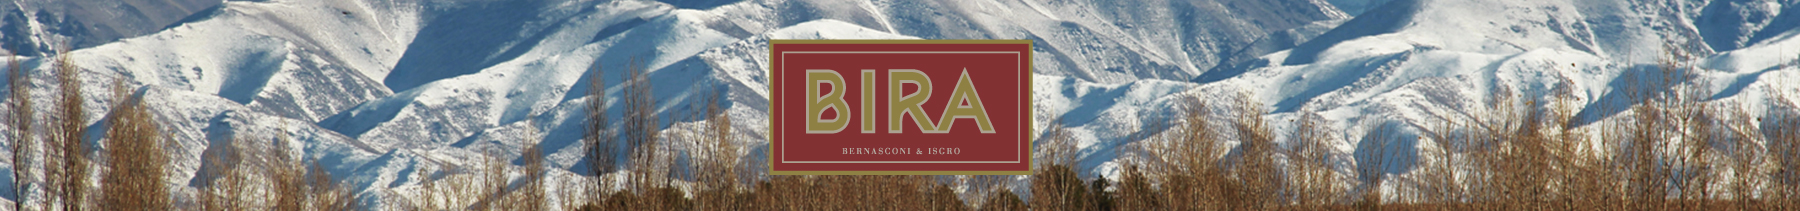 Bira Wines